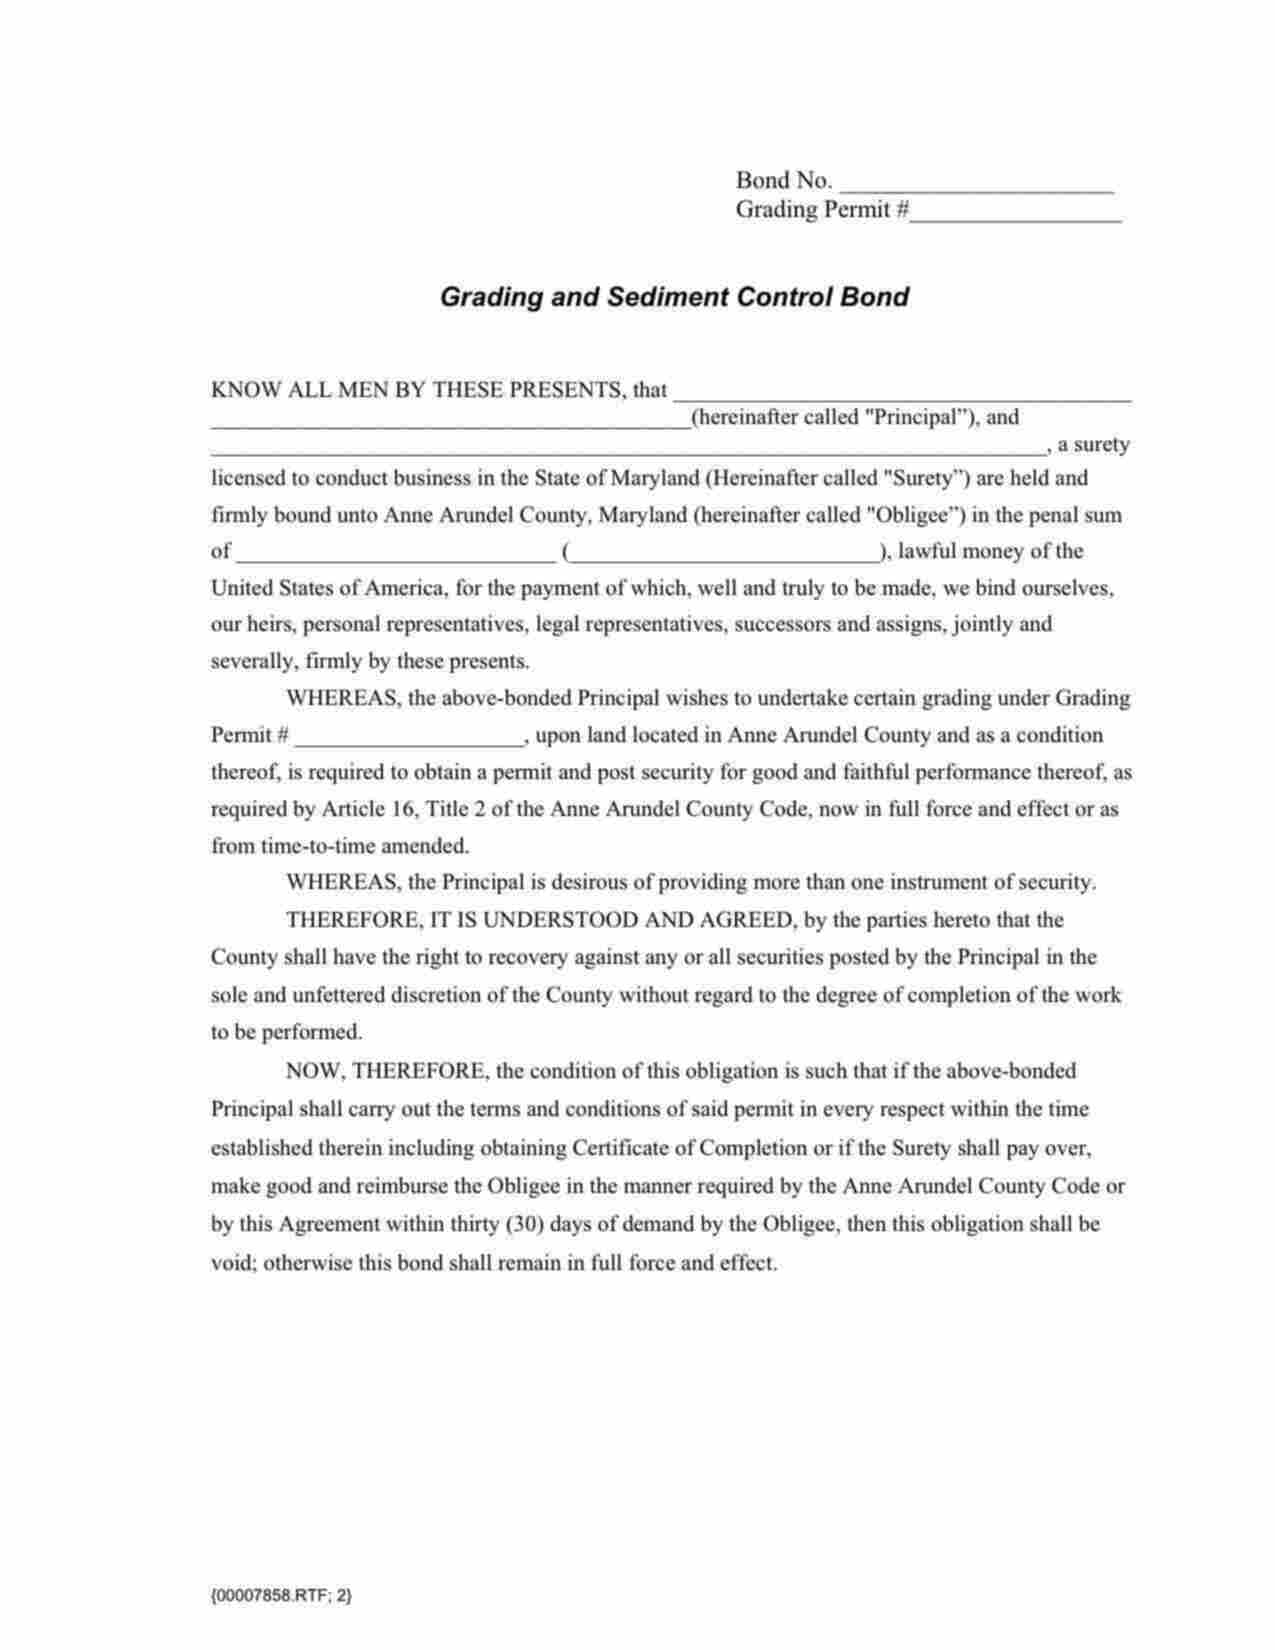 Maryland Grading and Sediment Control Bond Form